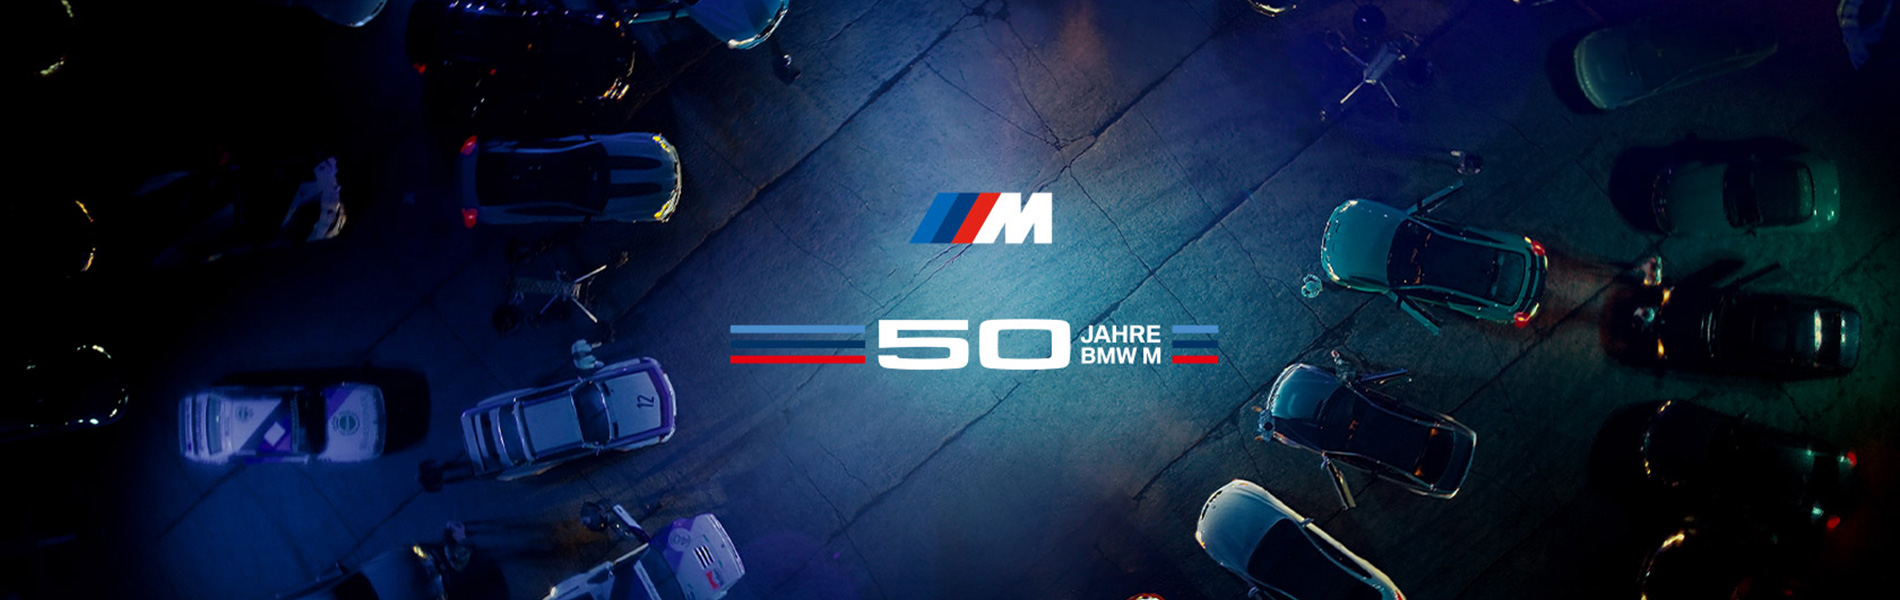 M50周年記念キャンペーン